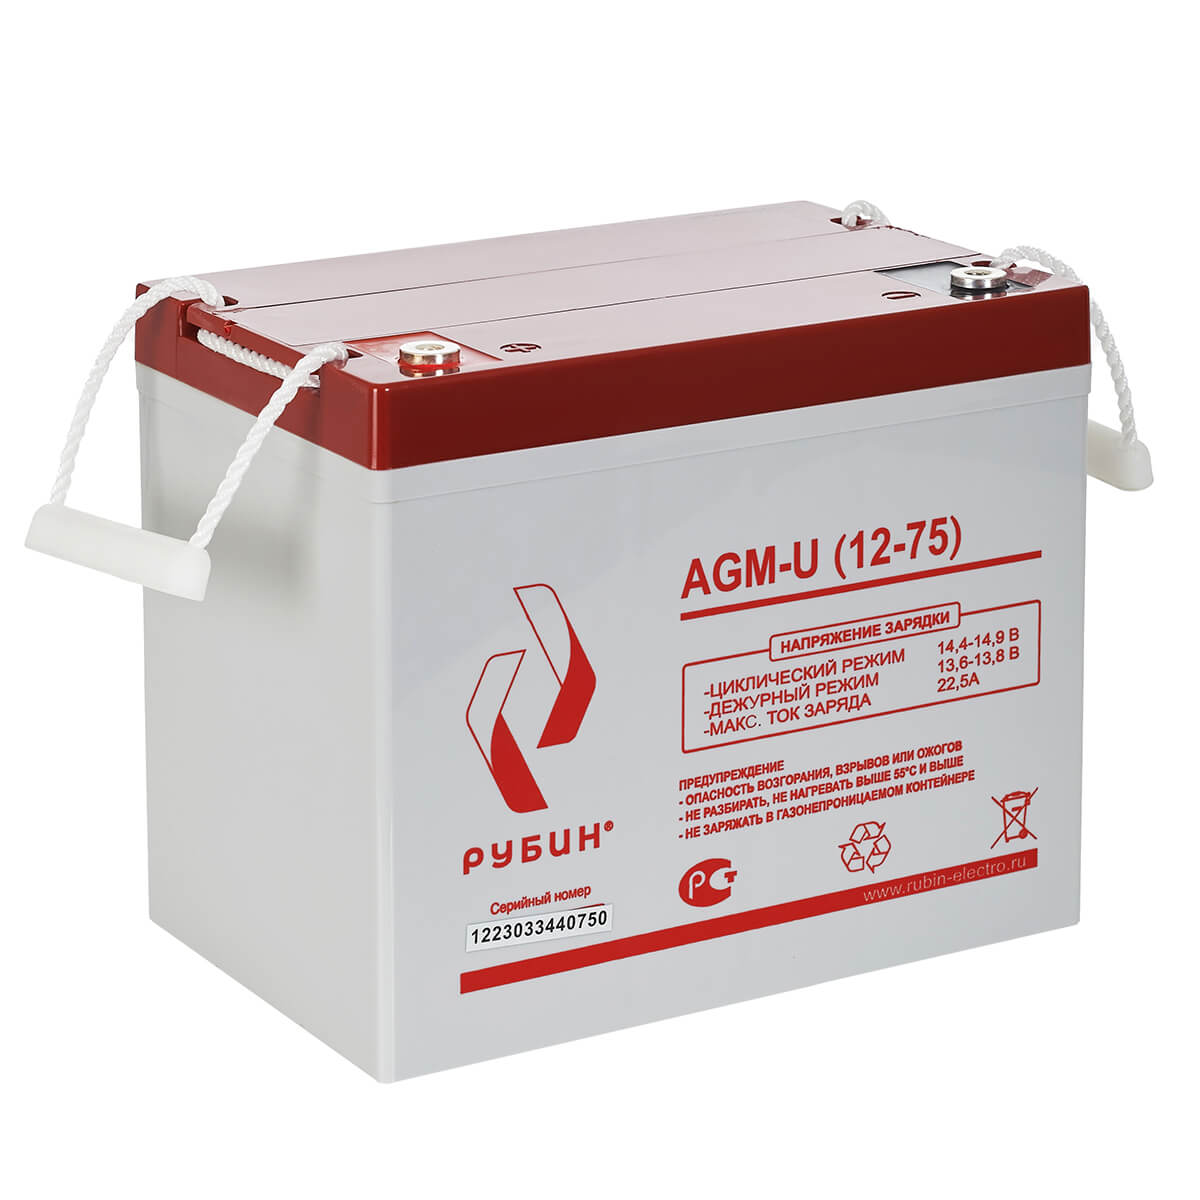 Аккумулятор для ИБП Рубин AGM-U (12-75)